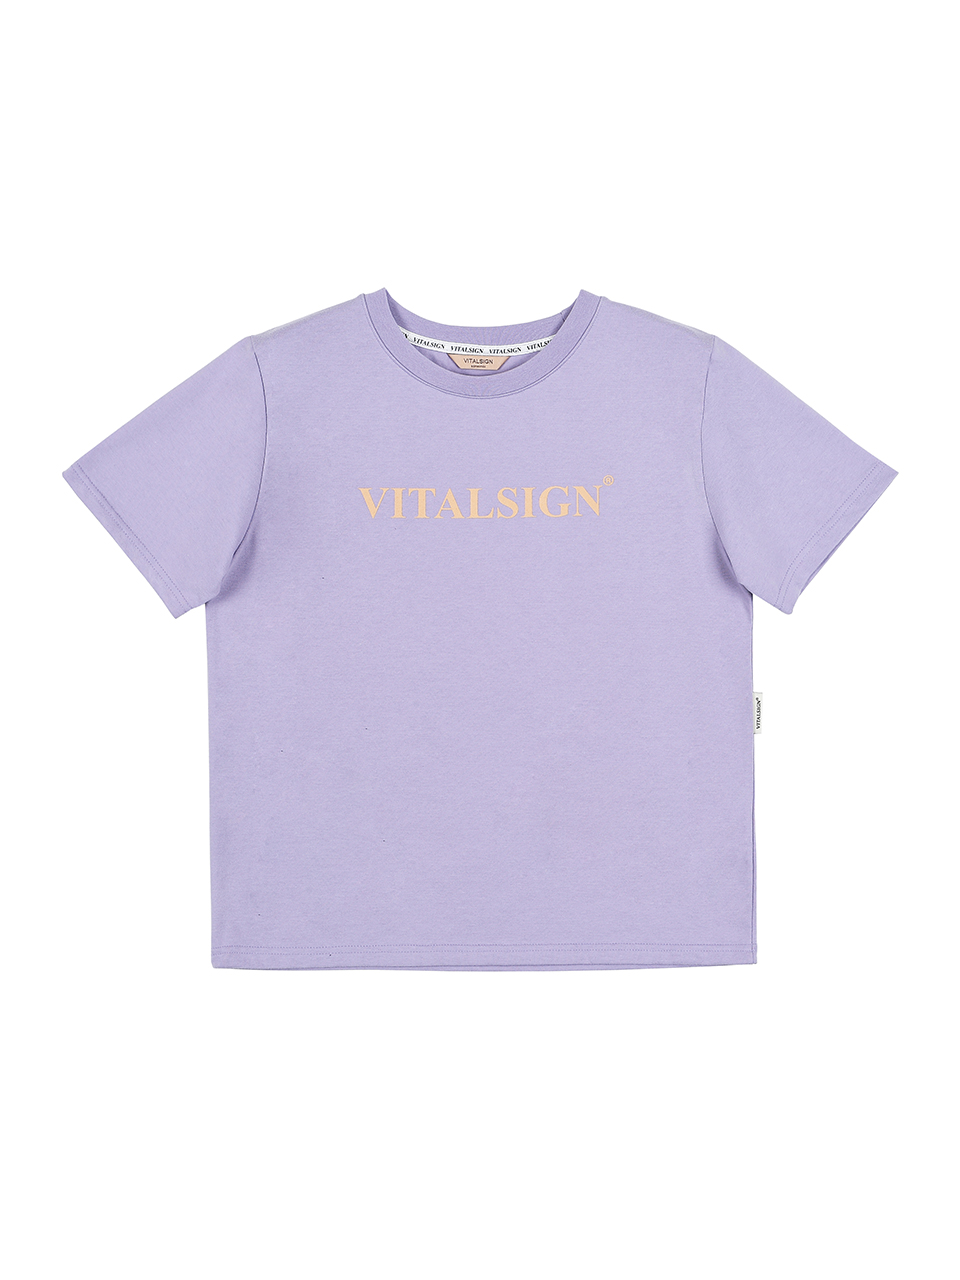 Vitalsign Signature T-shirt (Lavender)